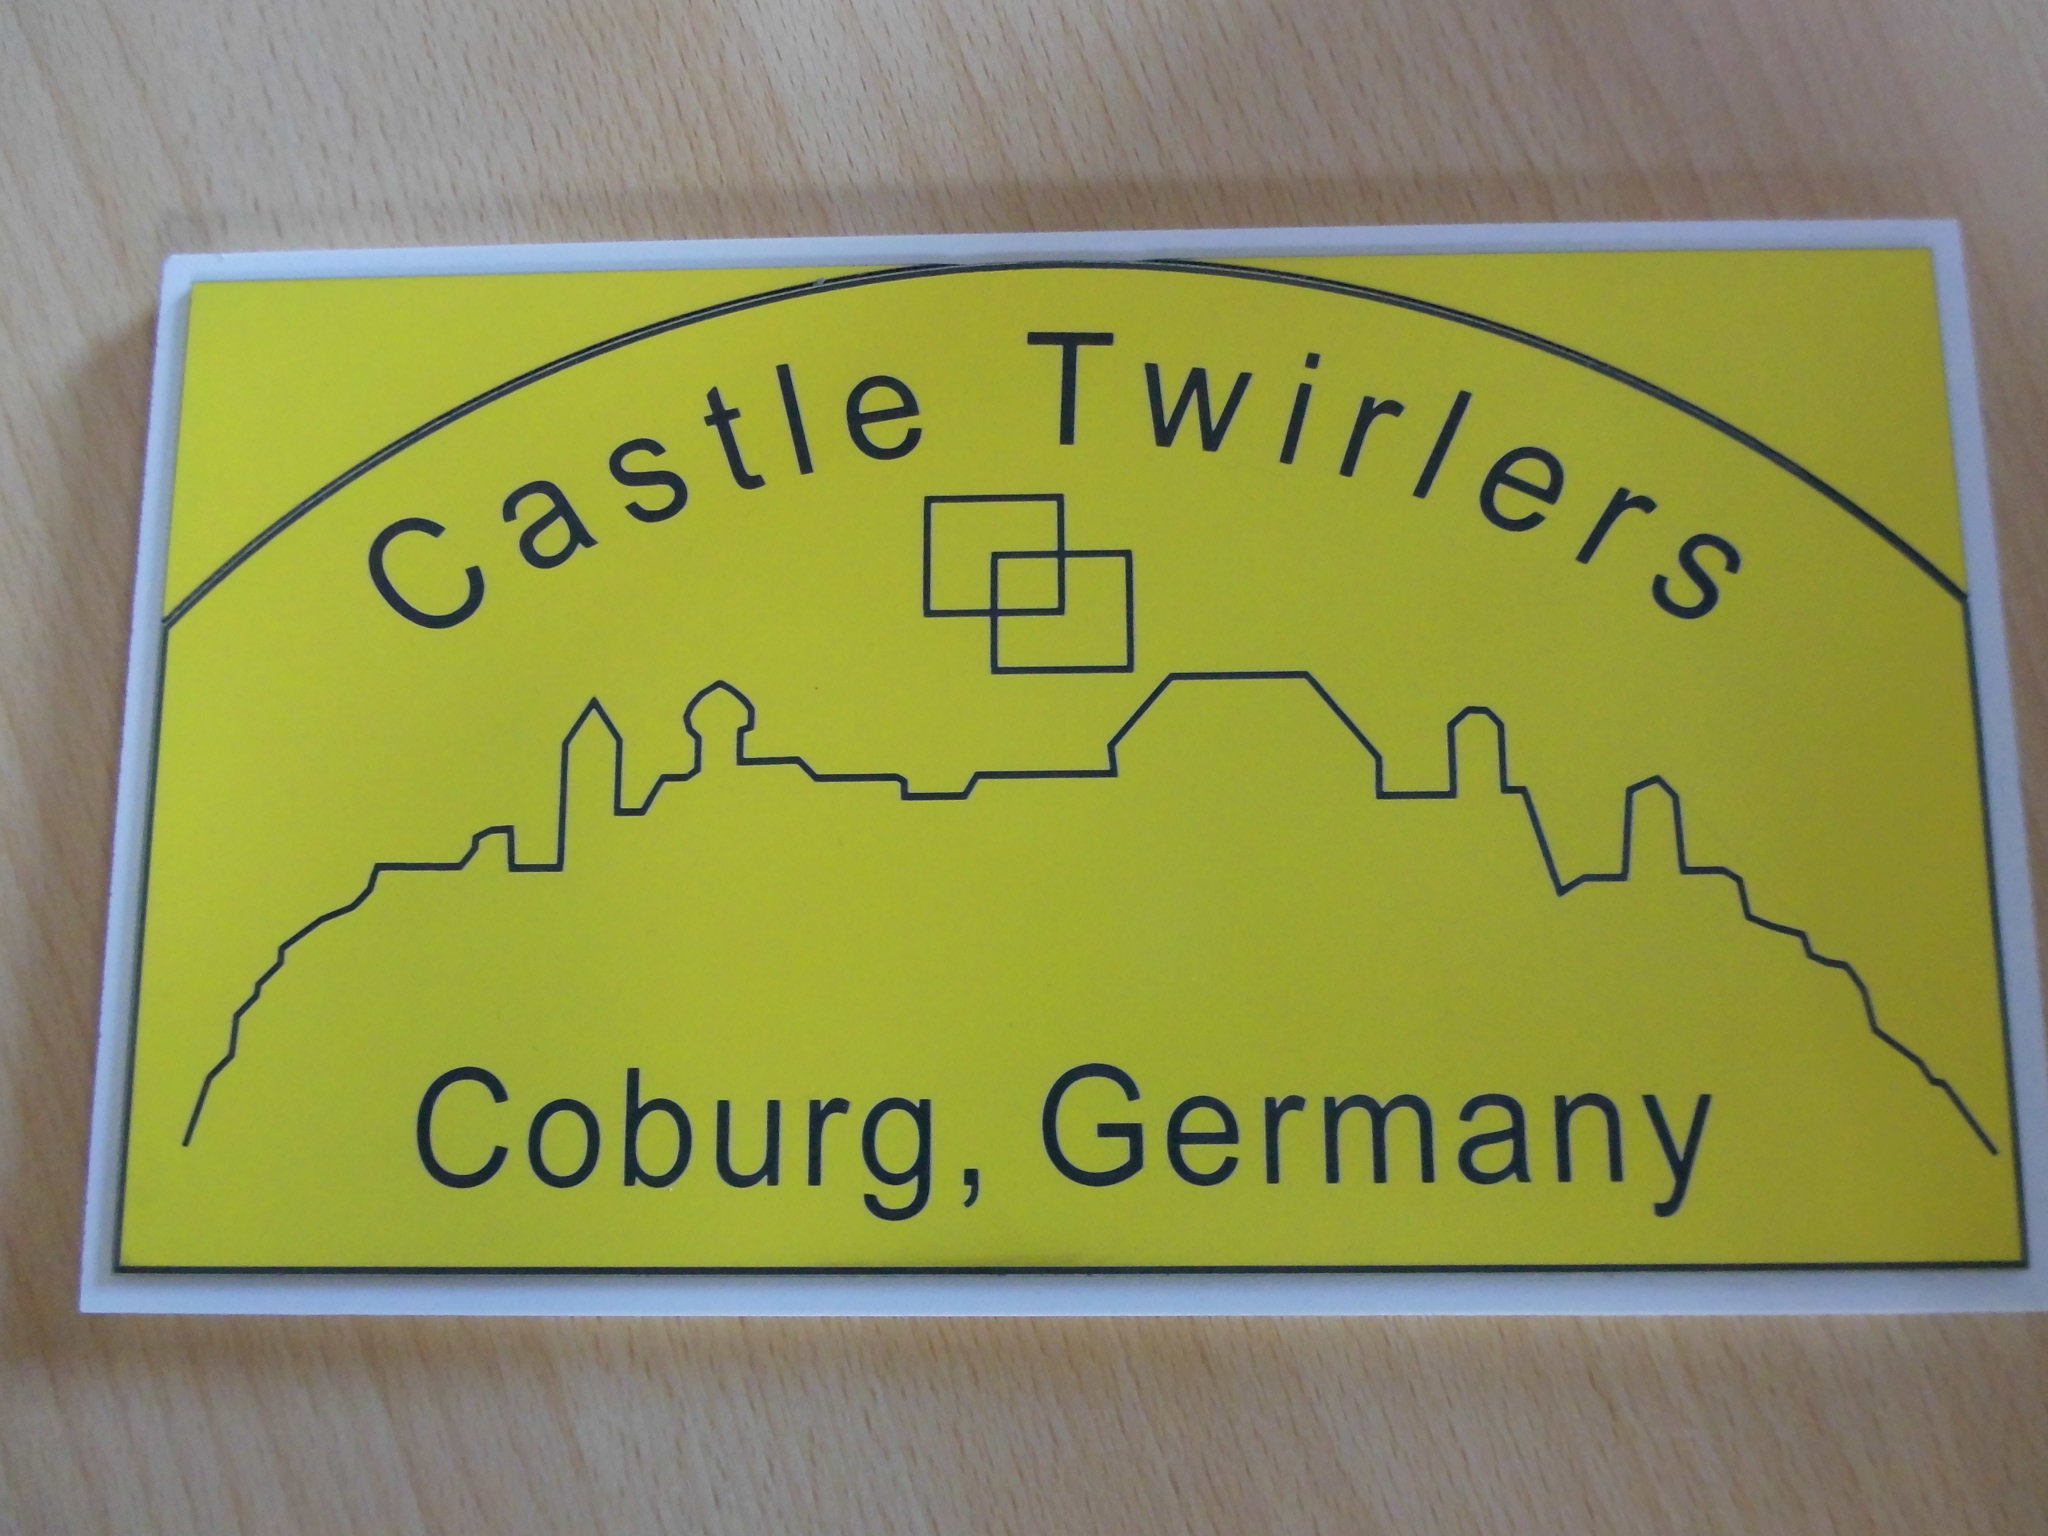 Castletwirlers Coburg